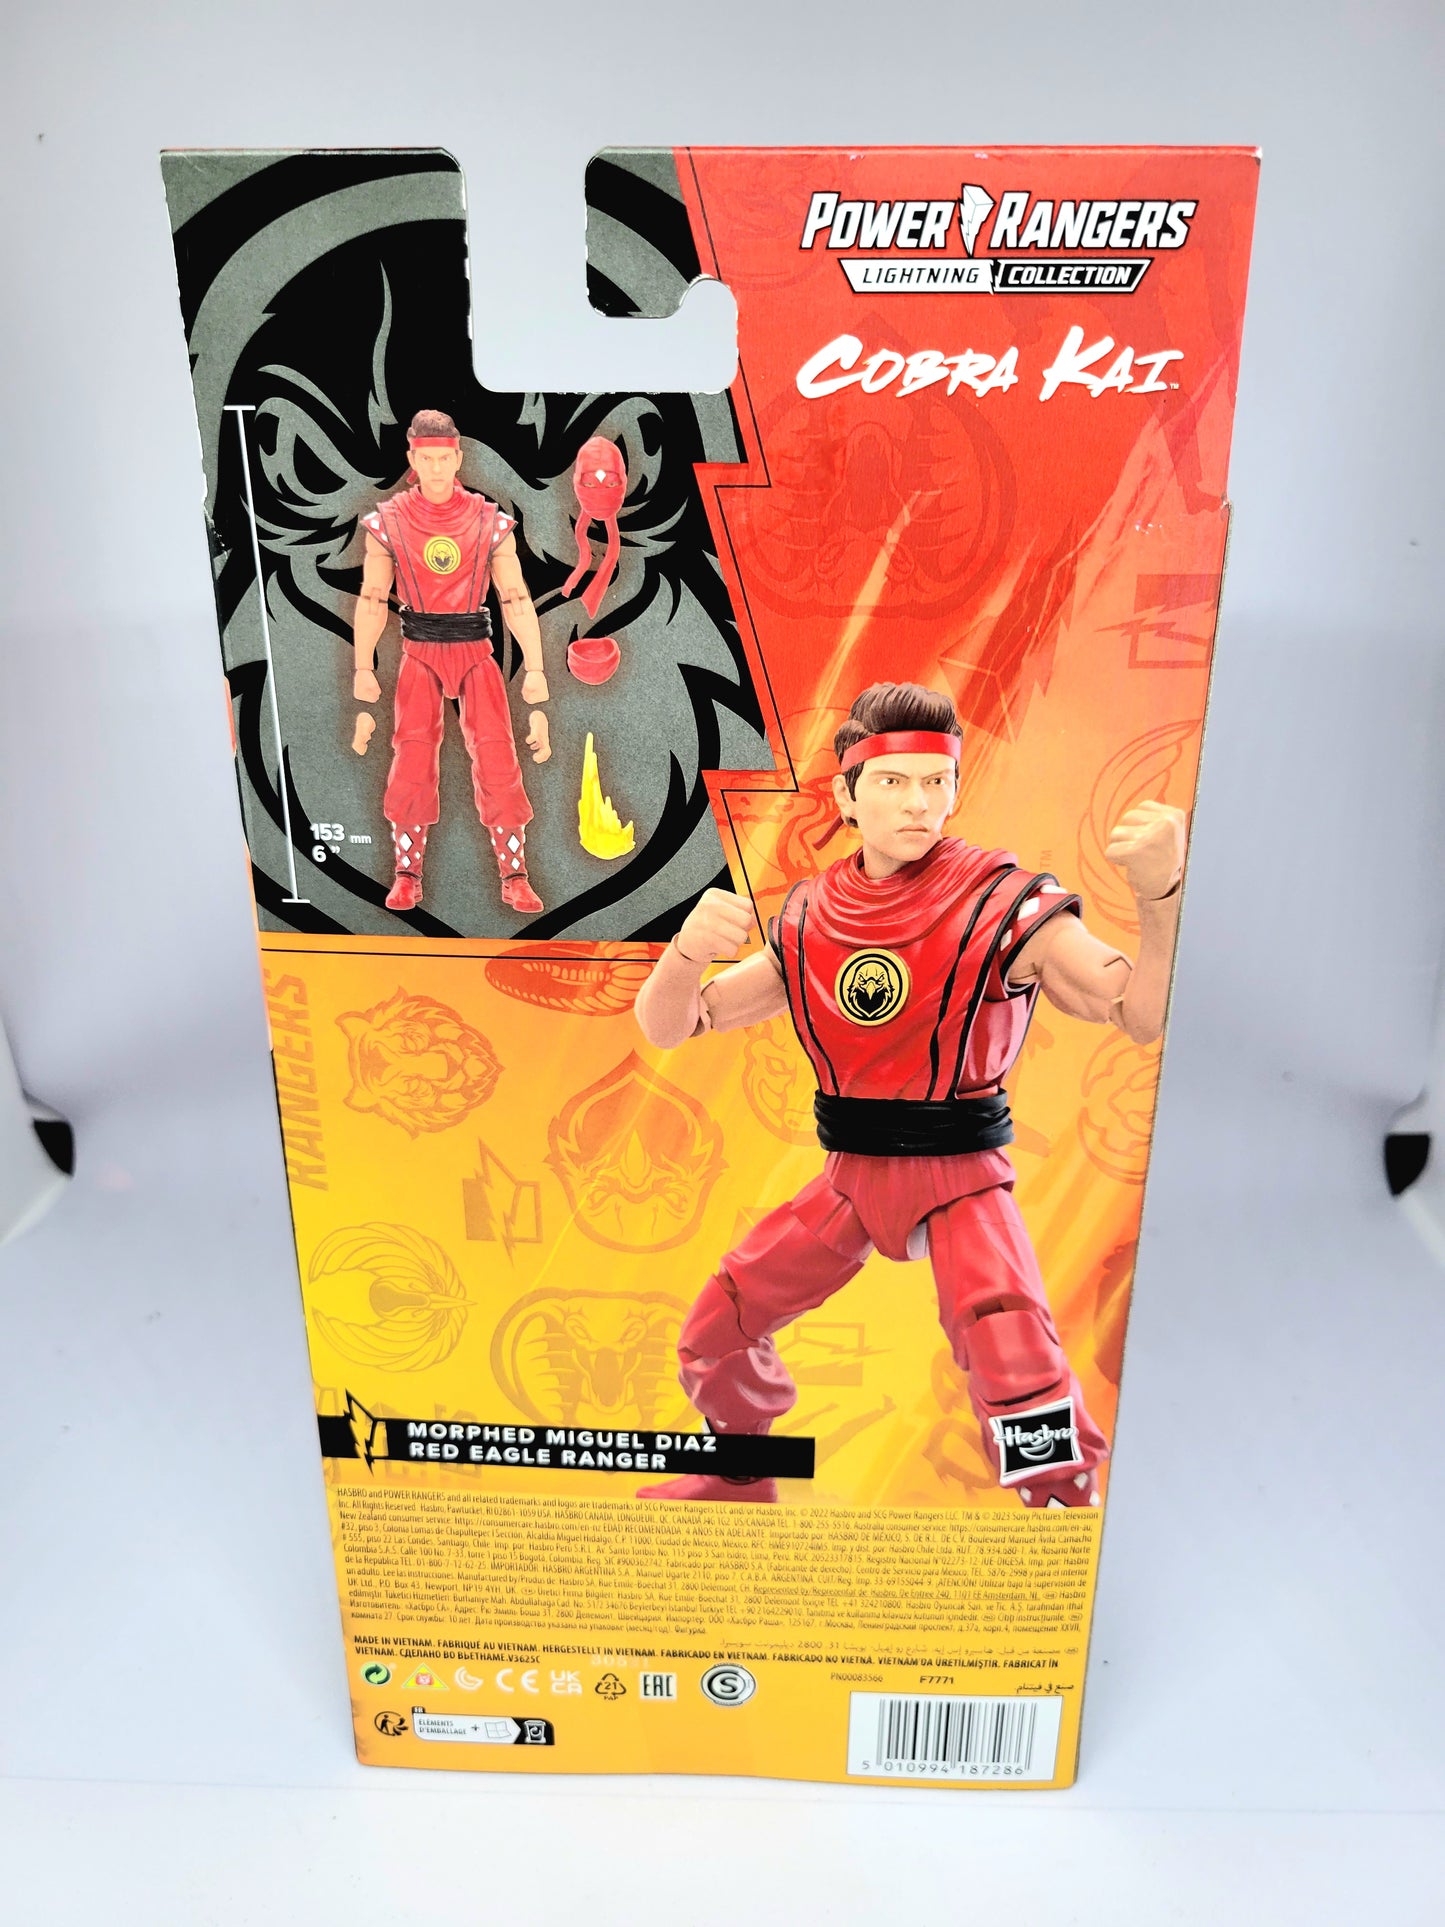 Hasbro Power Rangers Cobra Kai Lightning Collection Morphed Miguel Diaz Red Eagle Ranger Action Figure